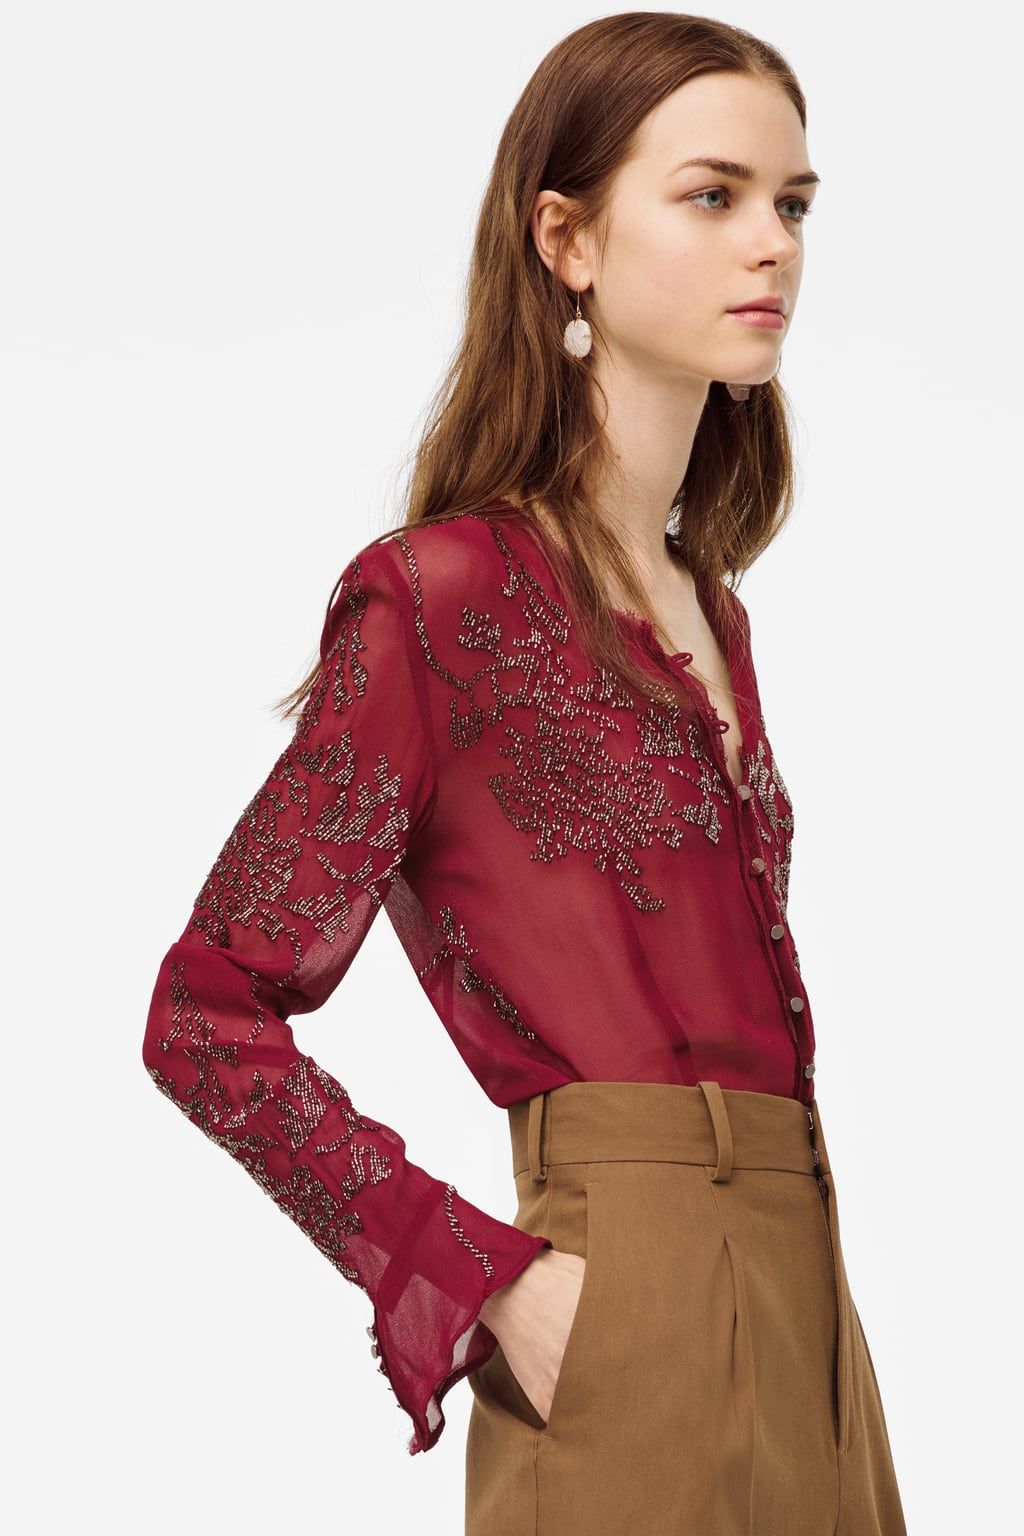 La blusa de Zara bordada semitransparente parece de Alta Costura